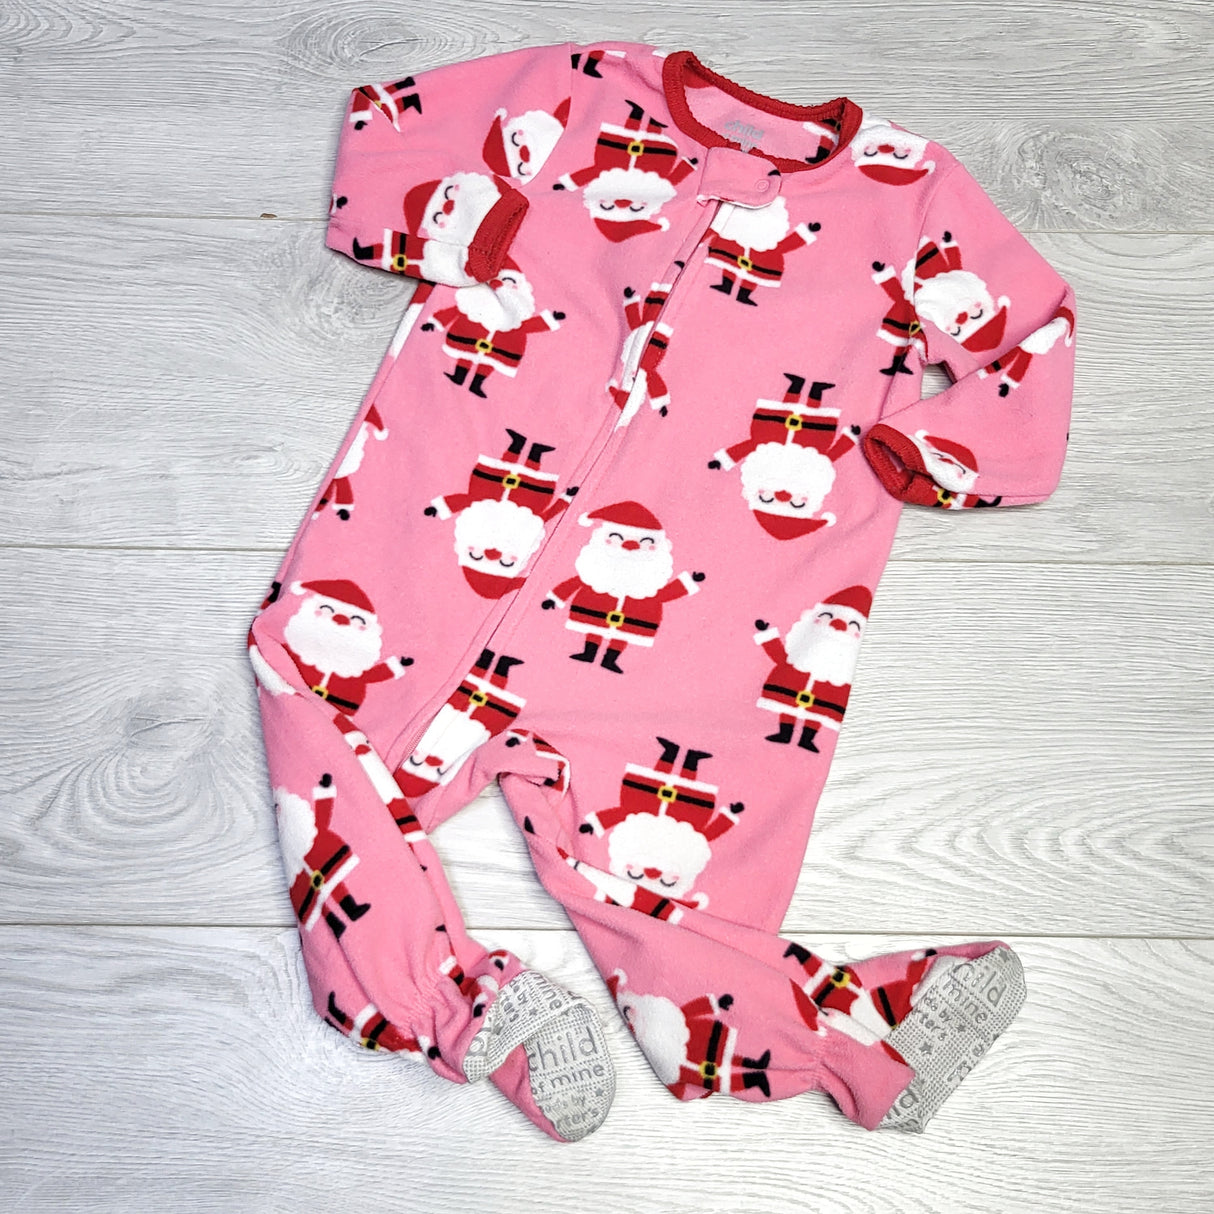 KJHN1 - Child of Mine pink zippered Santa sleeper. Size 12 months